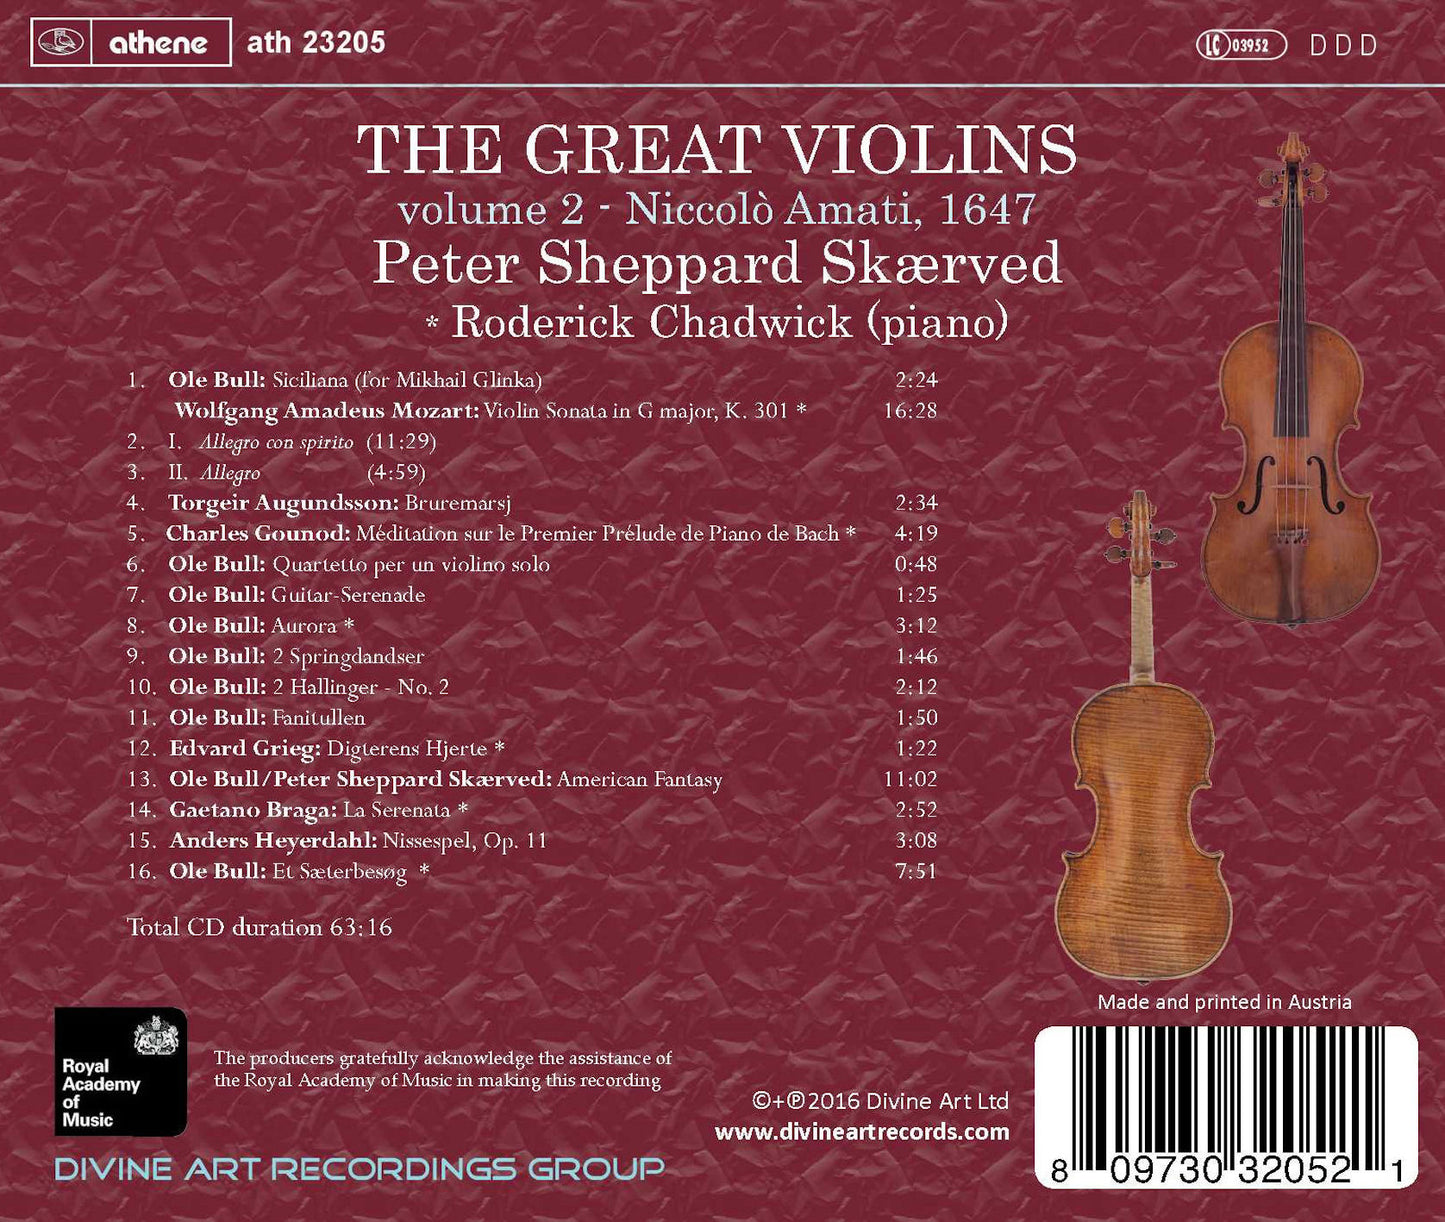 The Great Violins, Vol. 2: Niccolò Amati / Chadwick, Sheppard Skærved